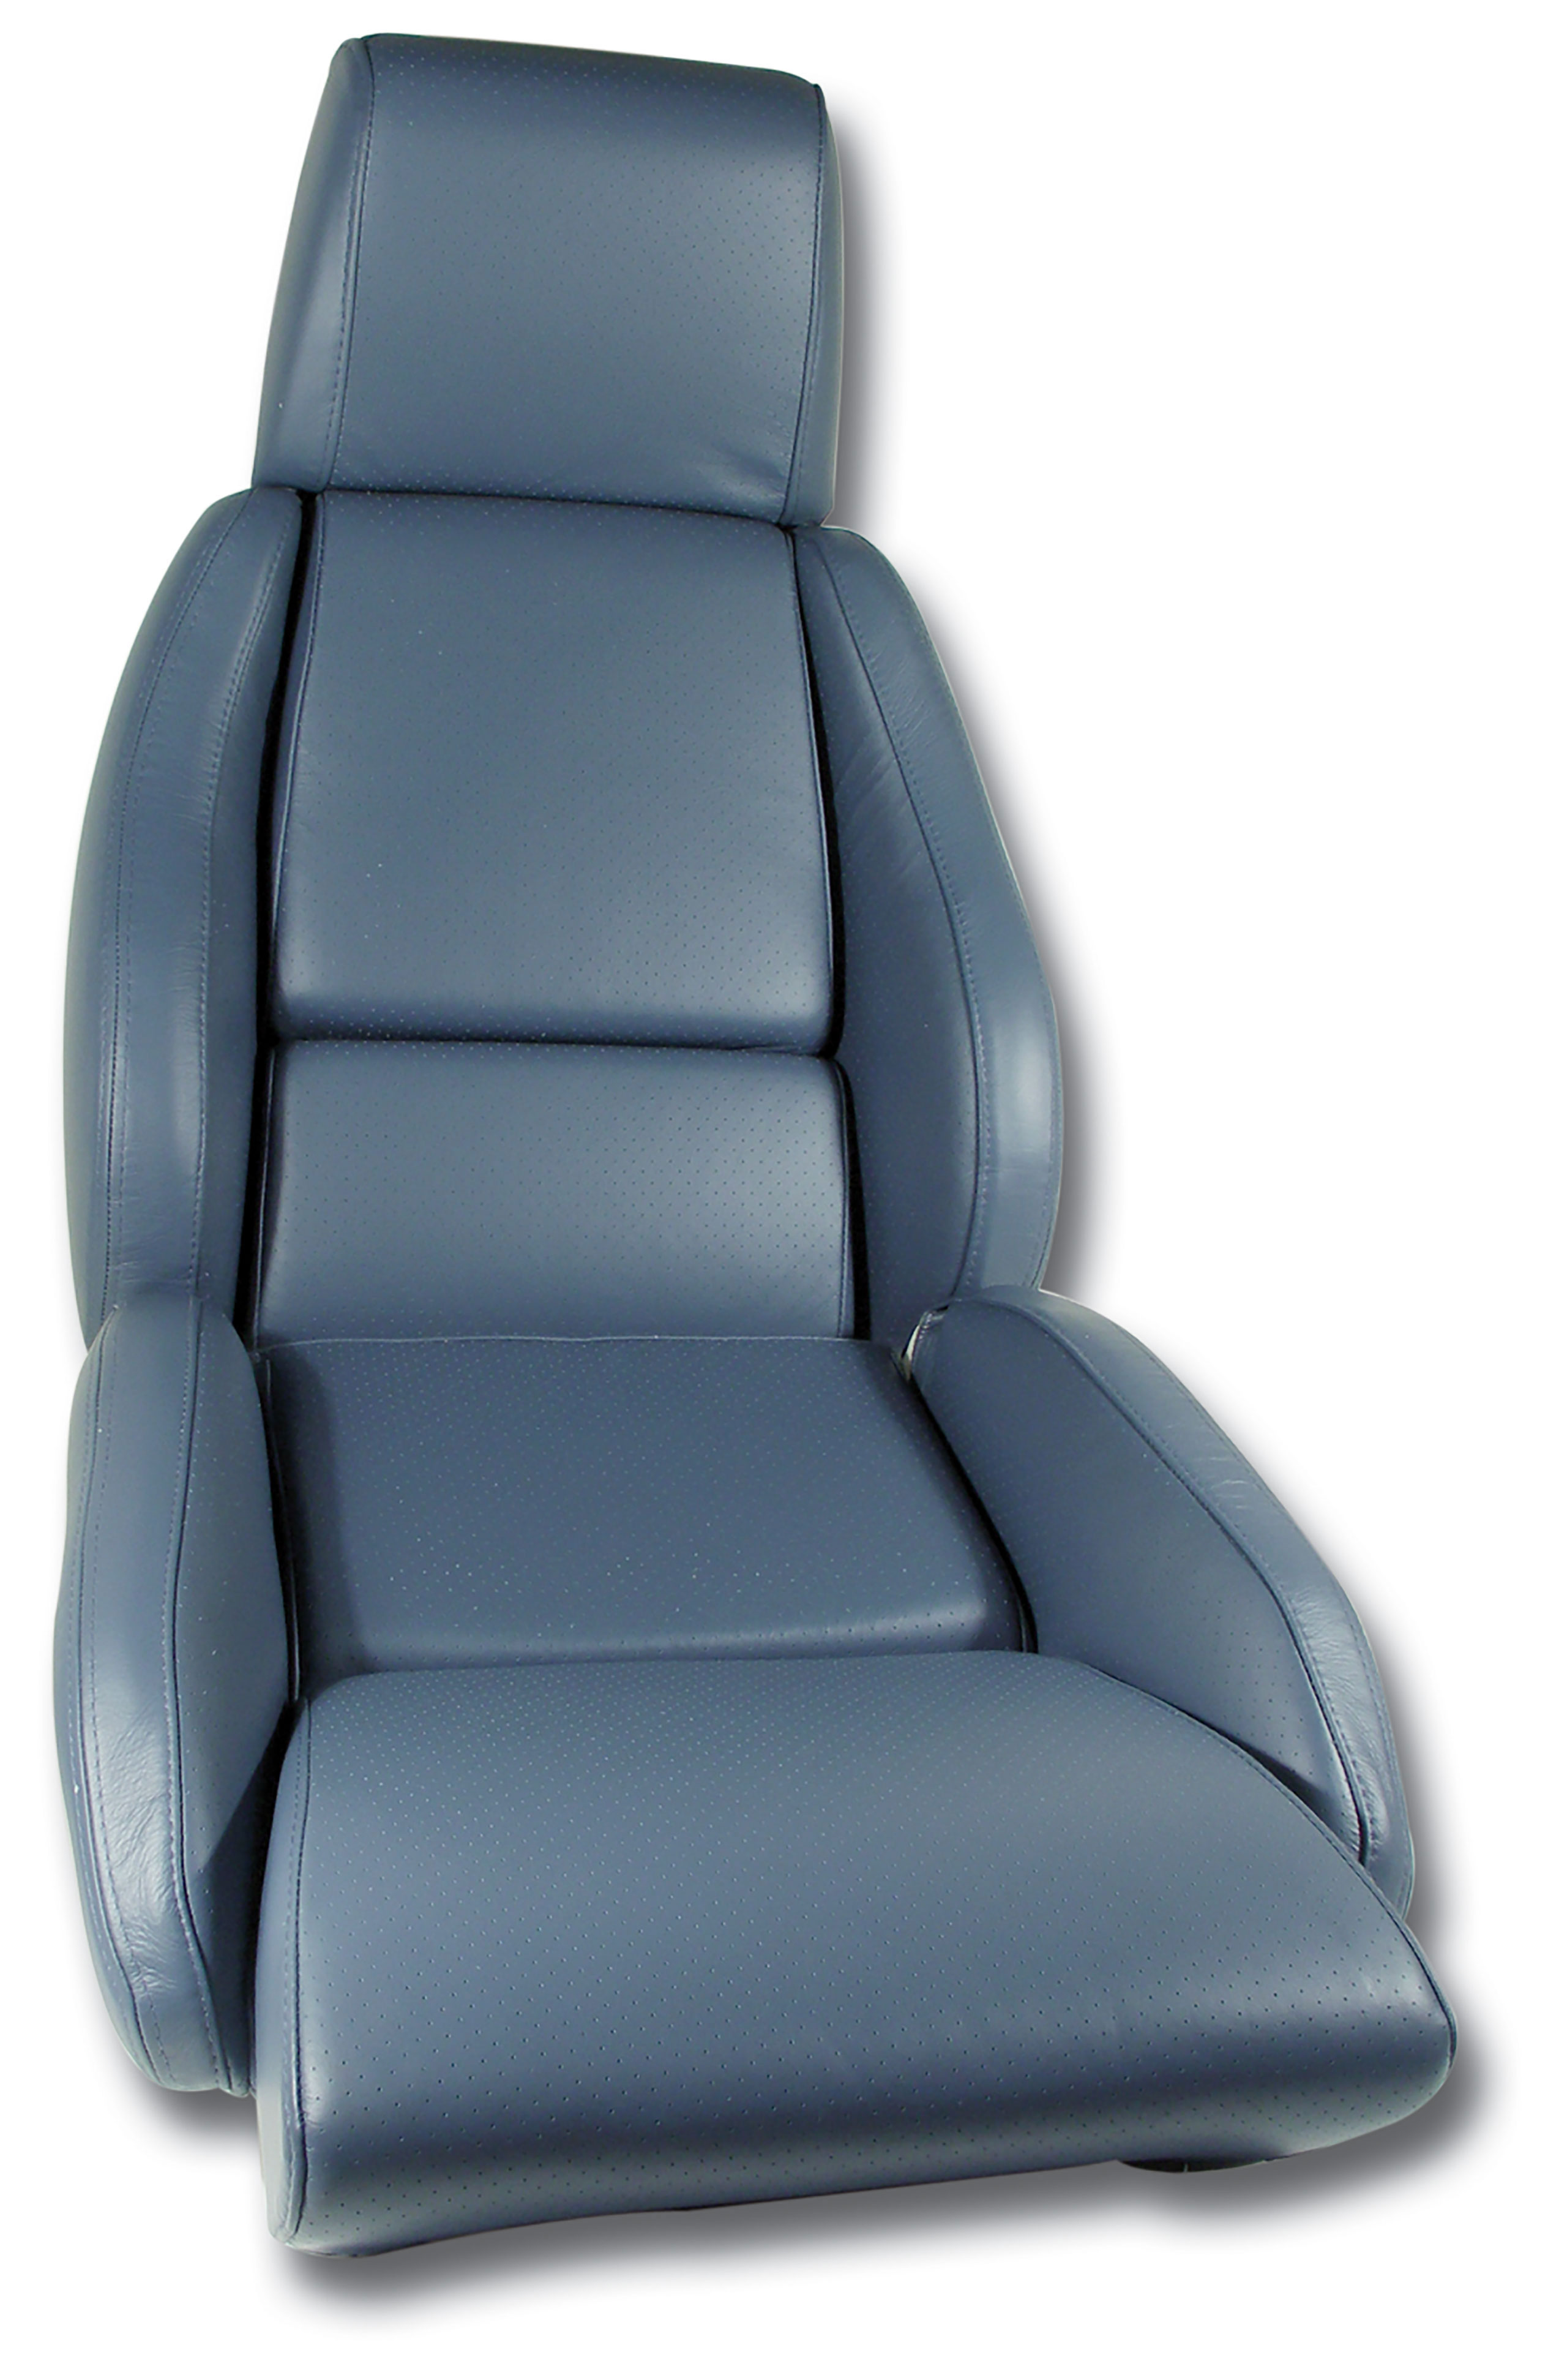 1984-1985 Corvette C4 Leather Seat Covers- Blue Standard CA-420370 